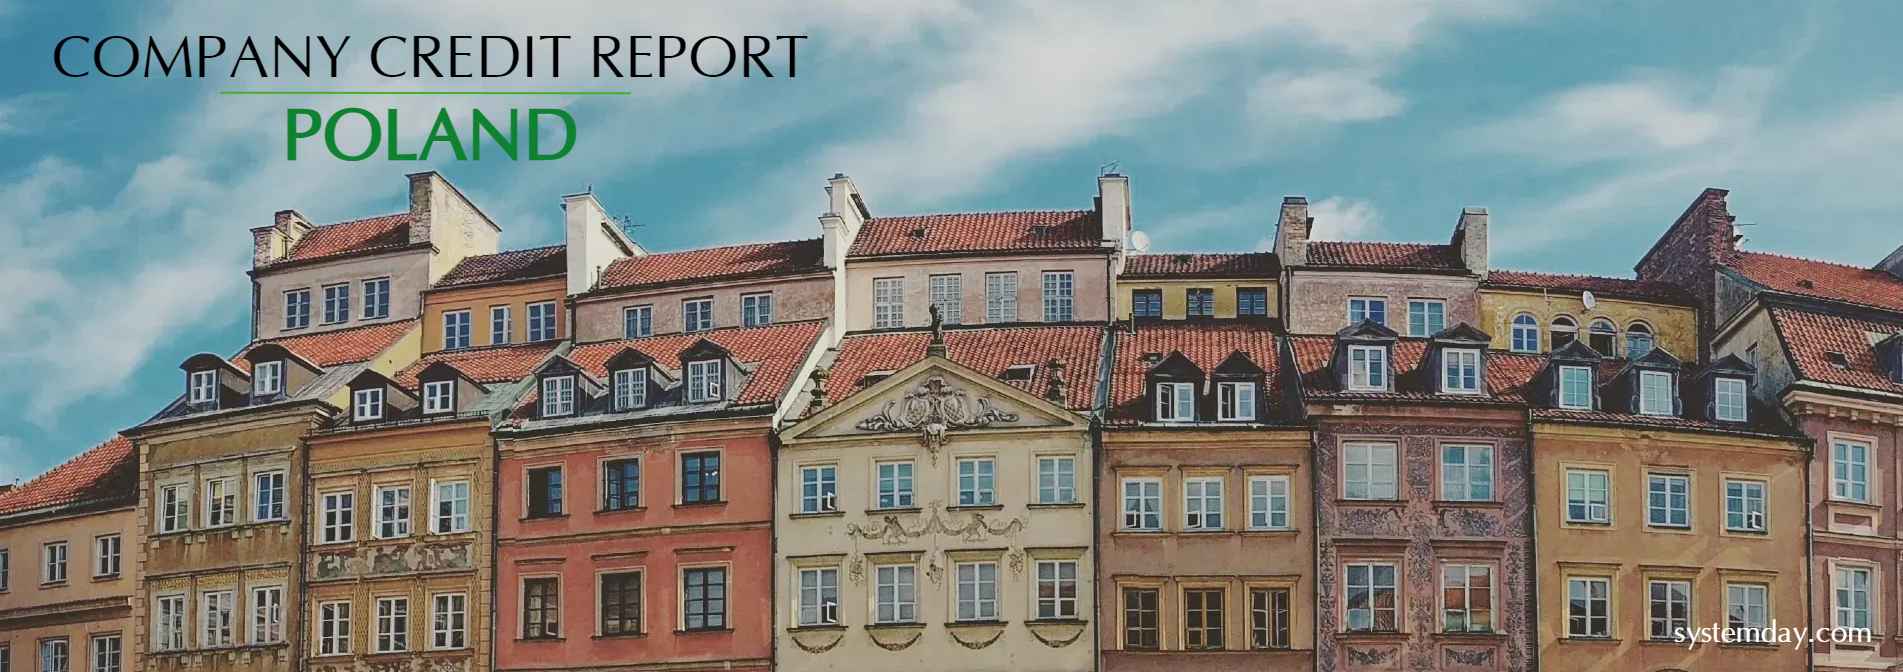 Poland Company Credit Report